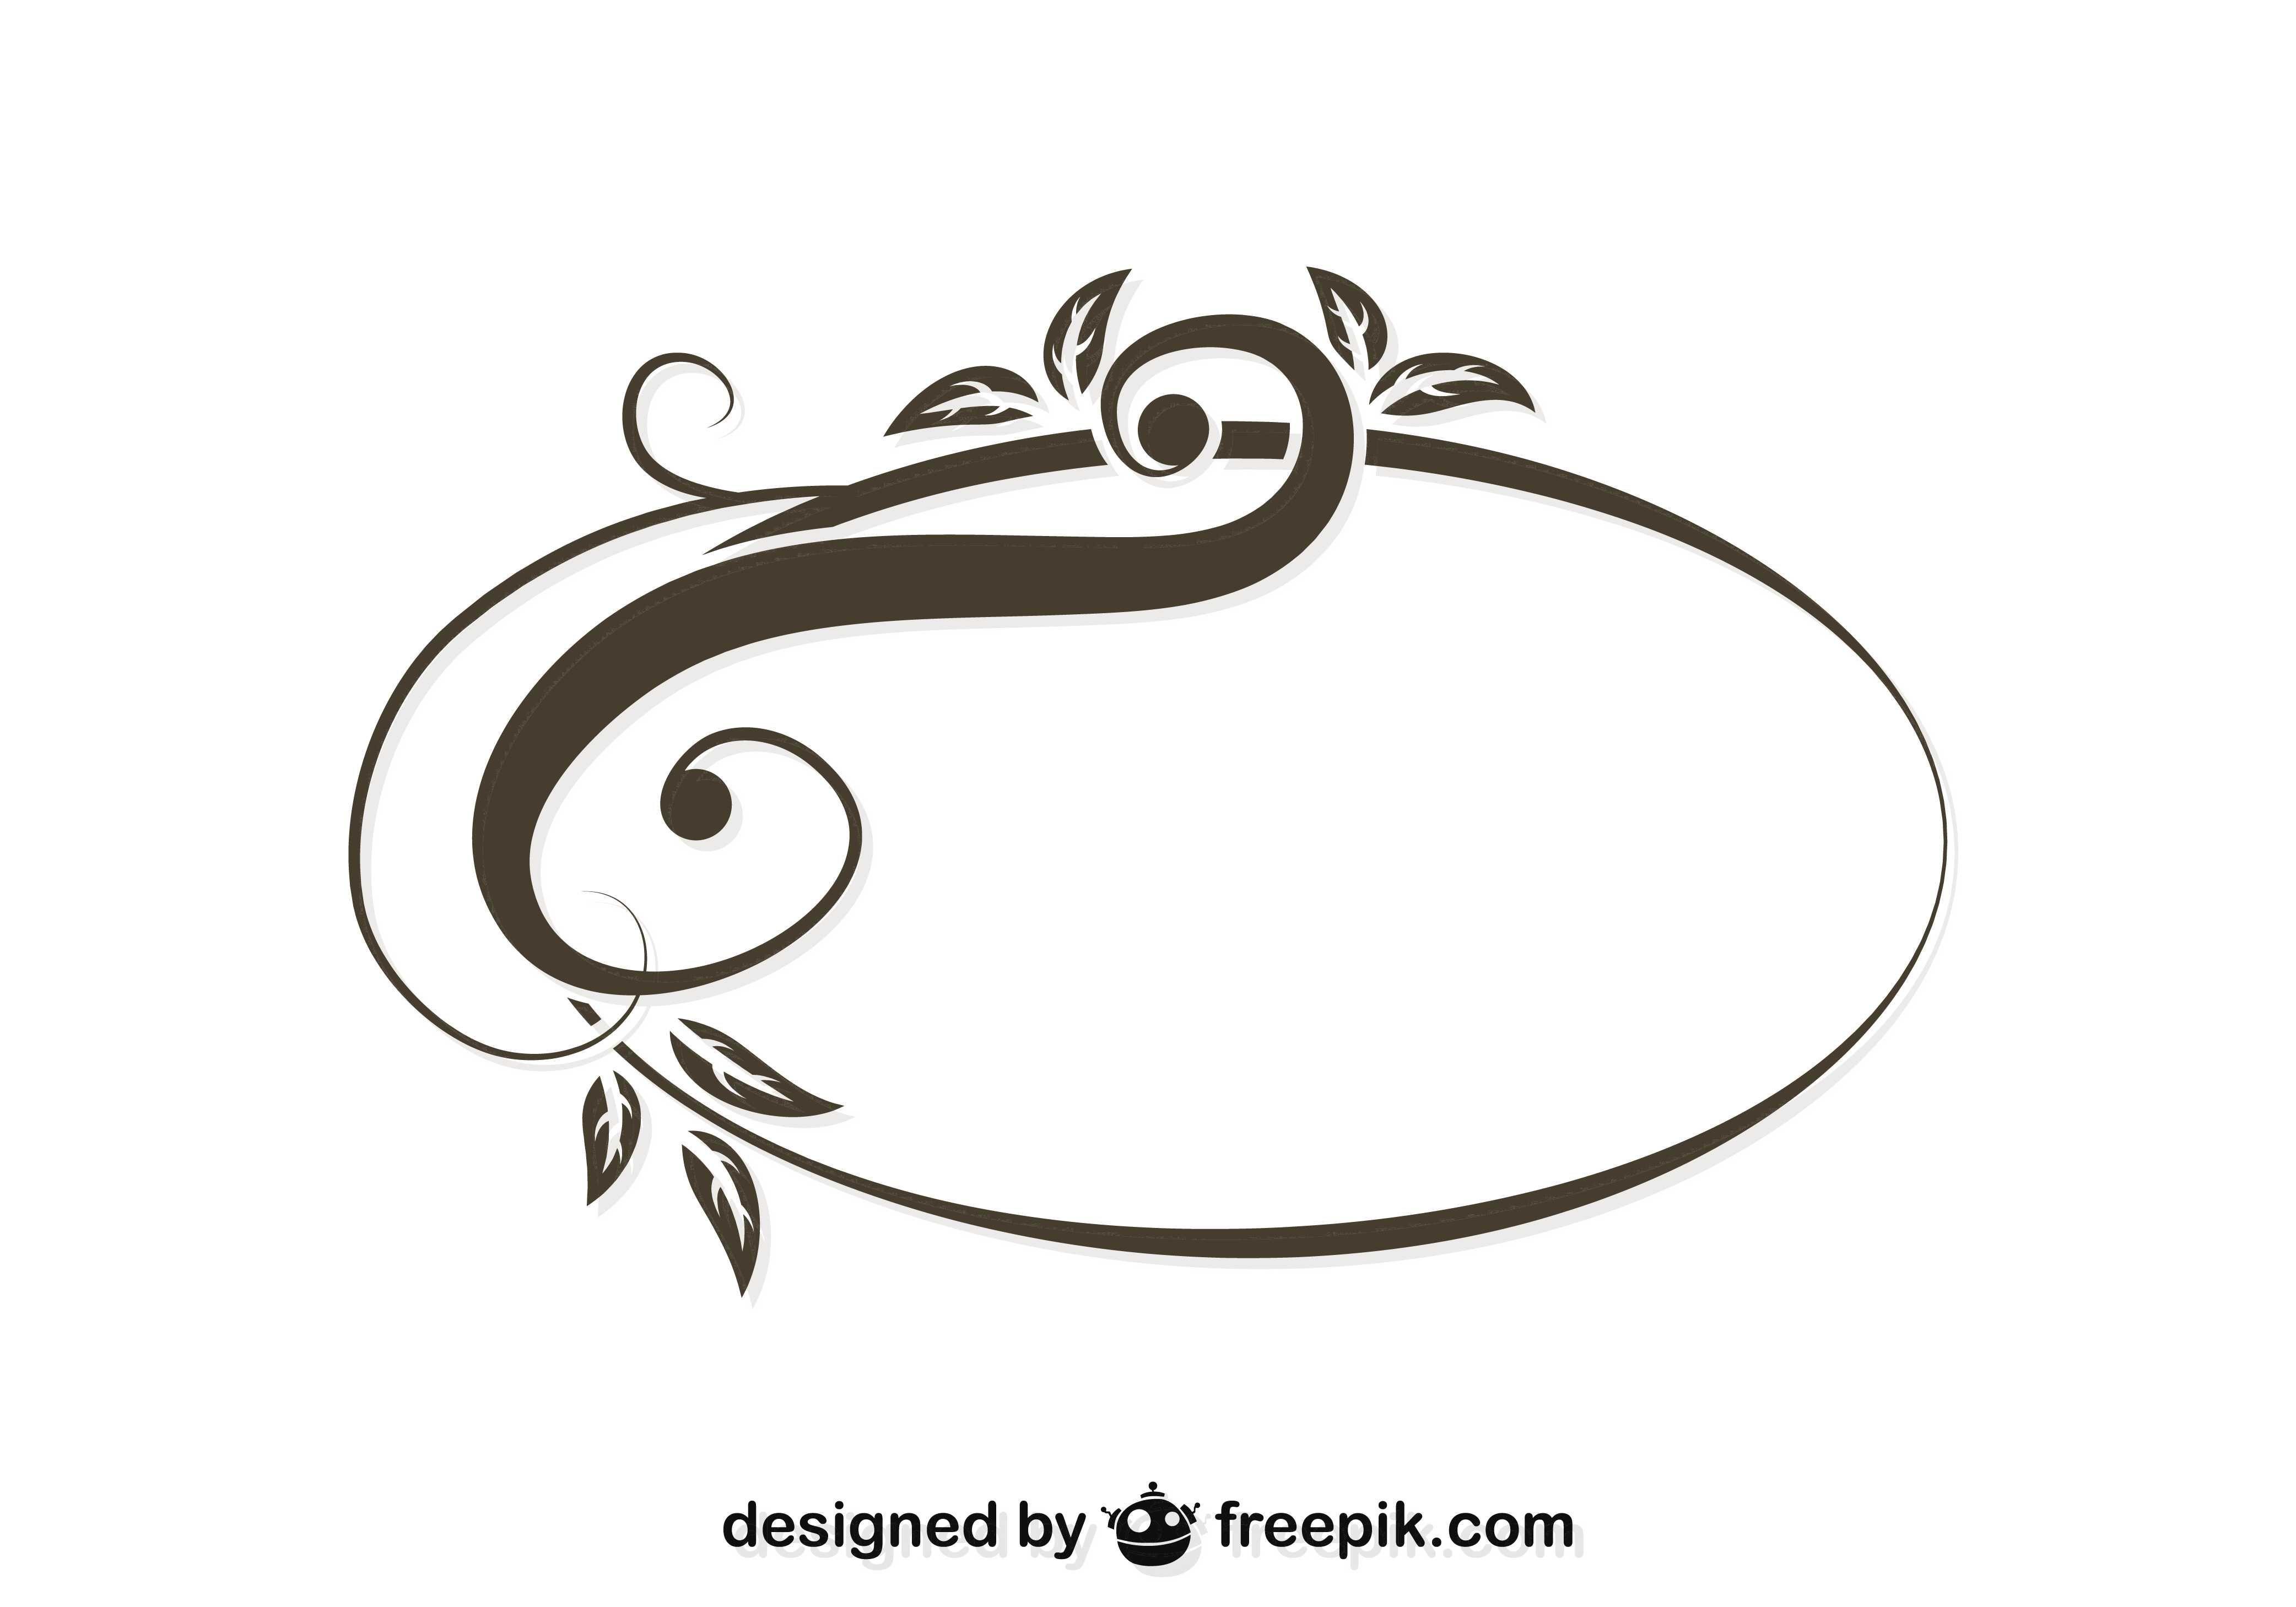 Oval Swirl Logo - Retro Asymmetrical Oval Swirl Stylish Design. Design Space